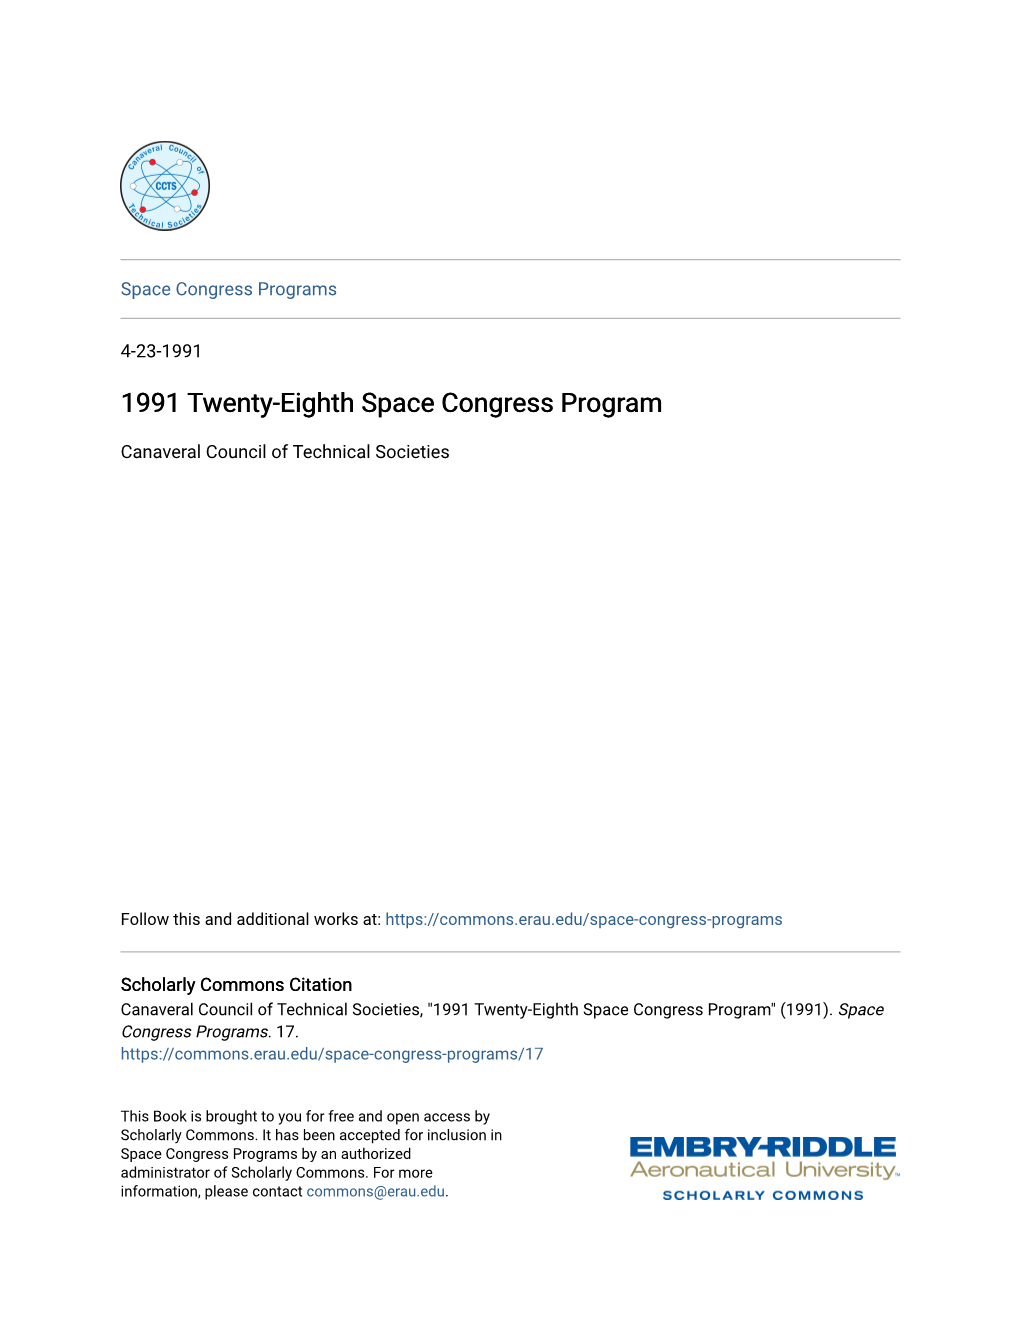 1991 Twenty-Eighth Space Congress Program